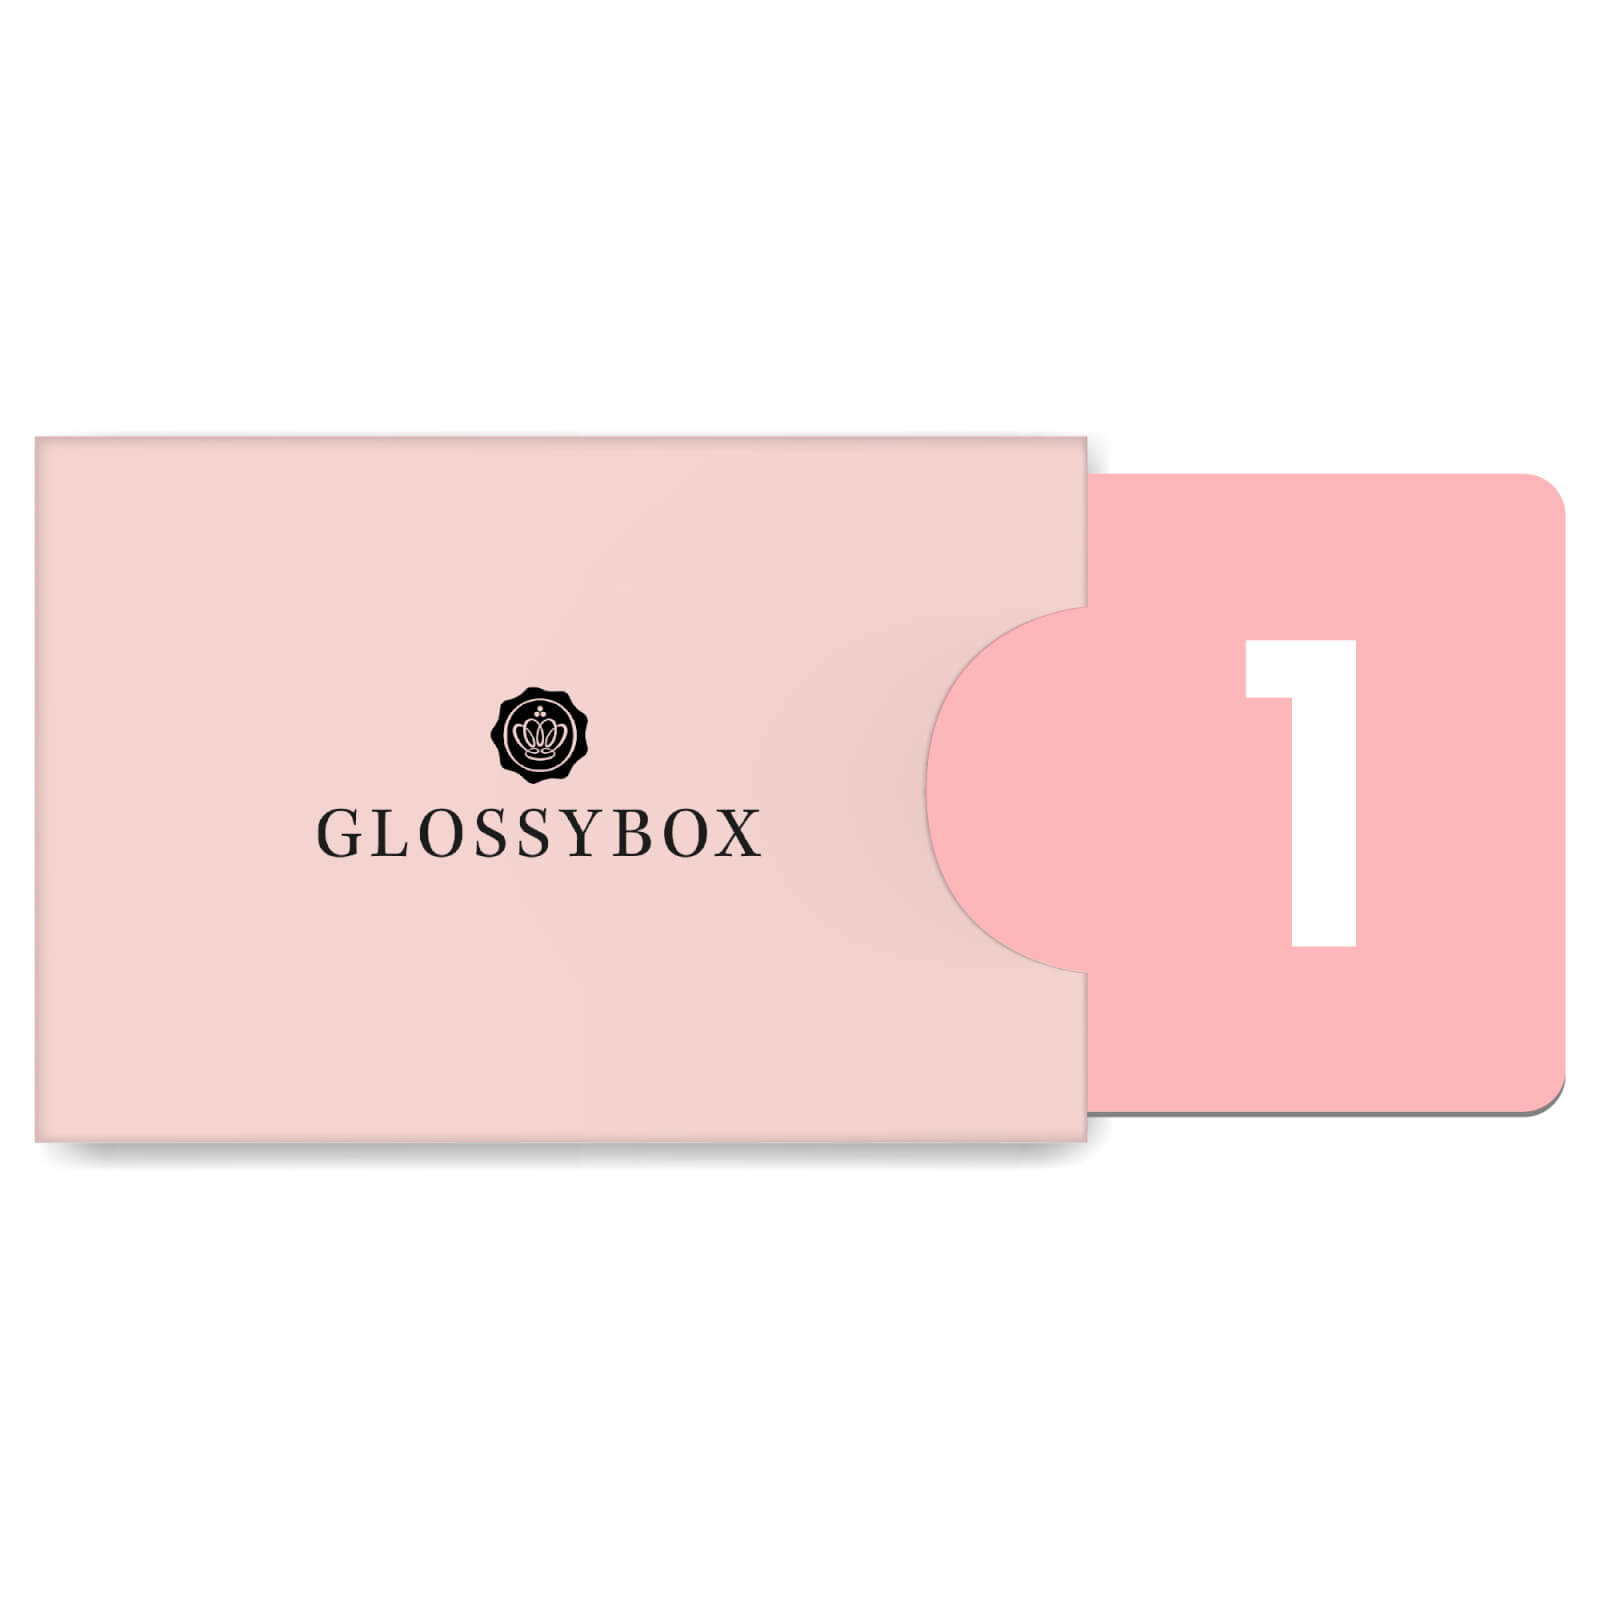 Glossy Box coupon: GLOSSYBOX eGift Voucher - 1 Month Plan